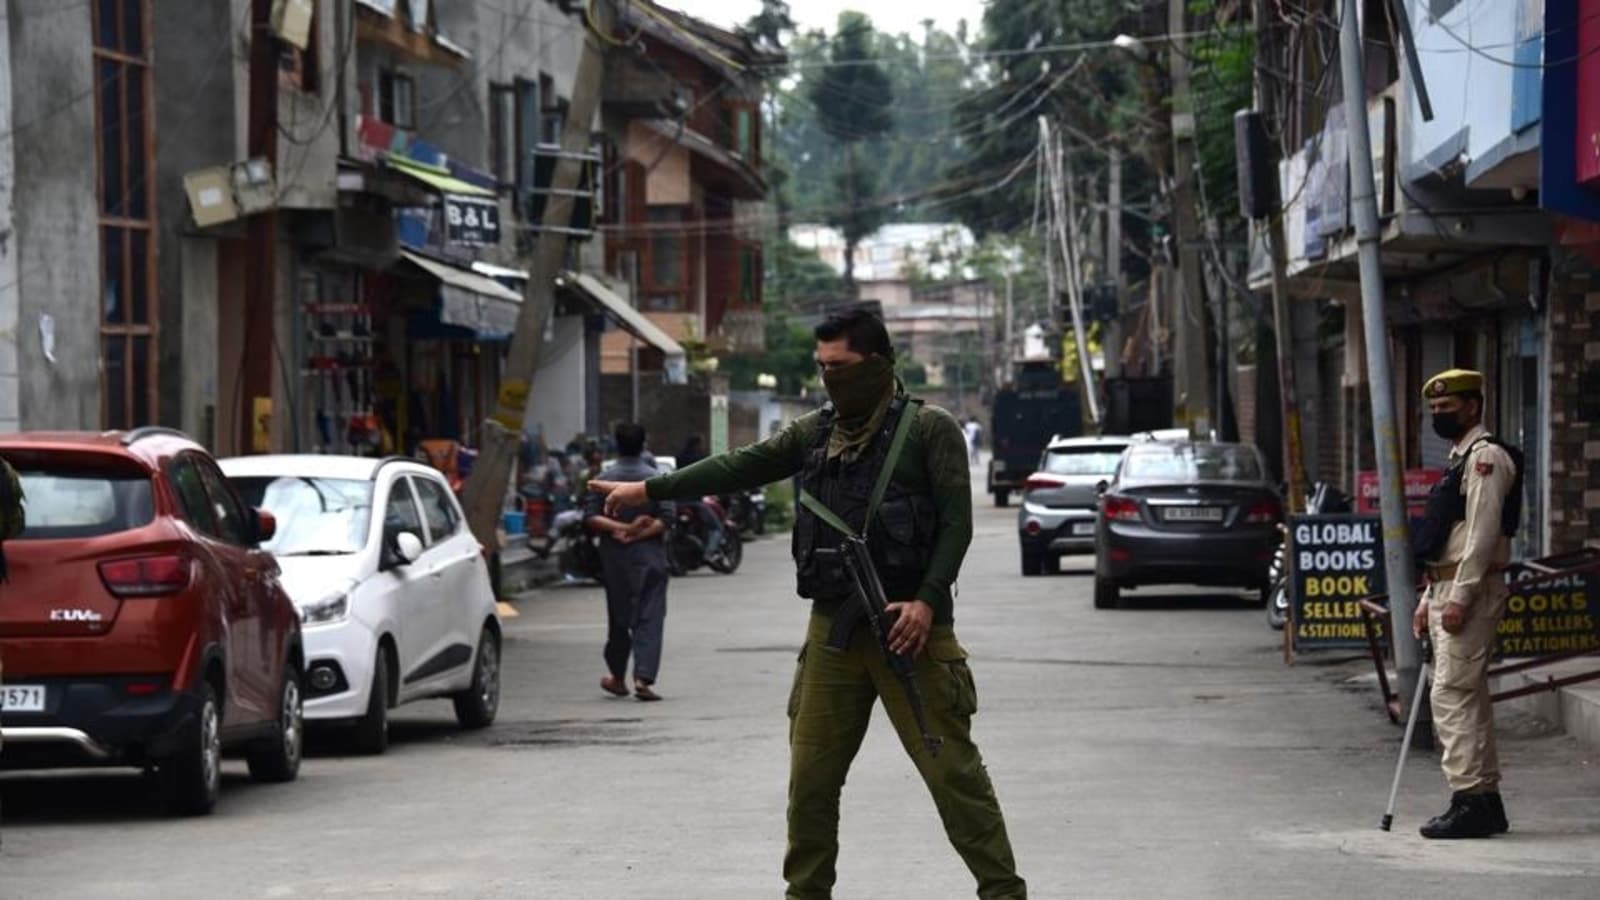 Police recover 18 detonators at Jammu Railway station